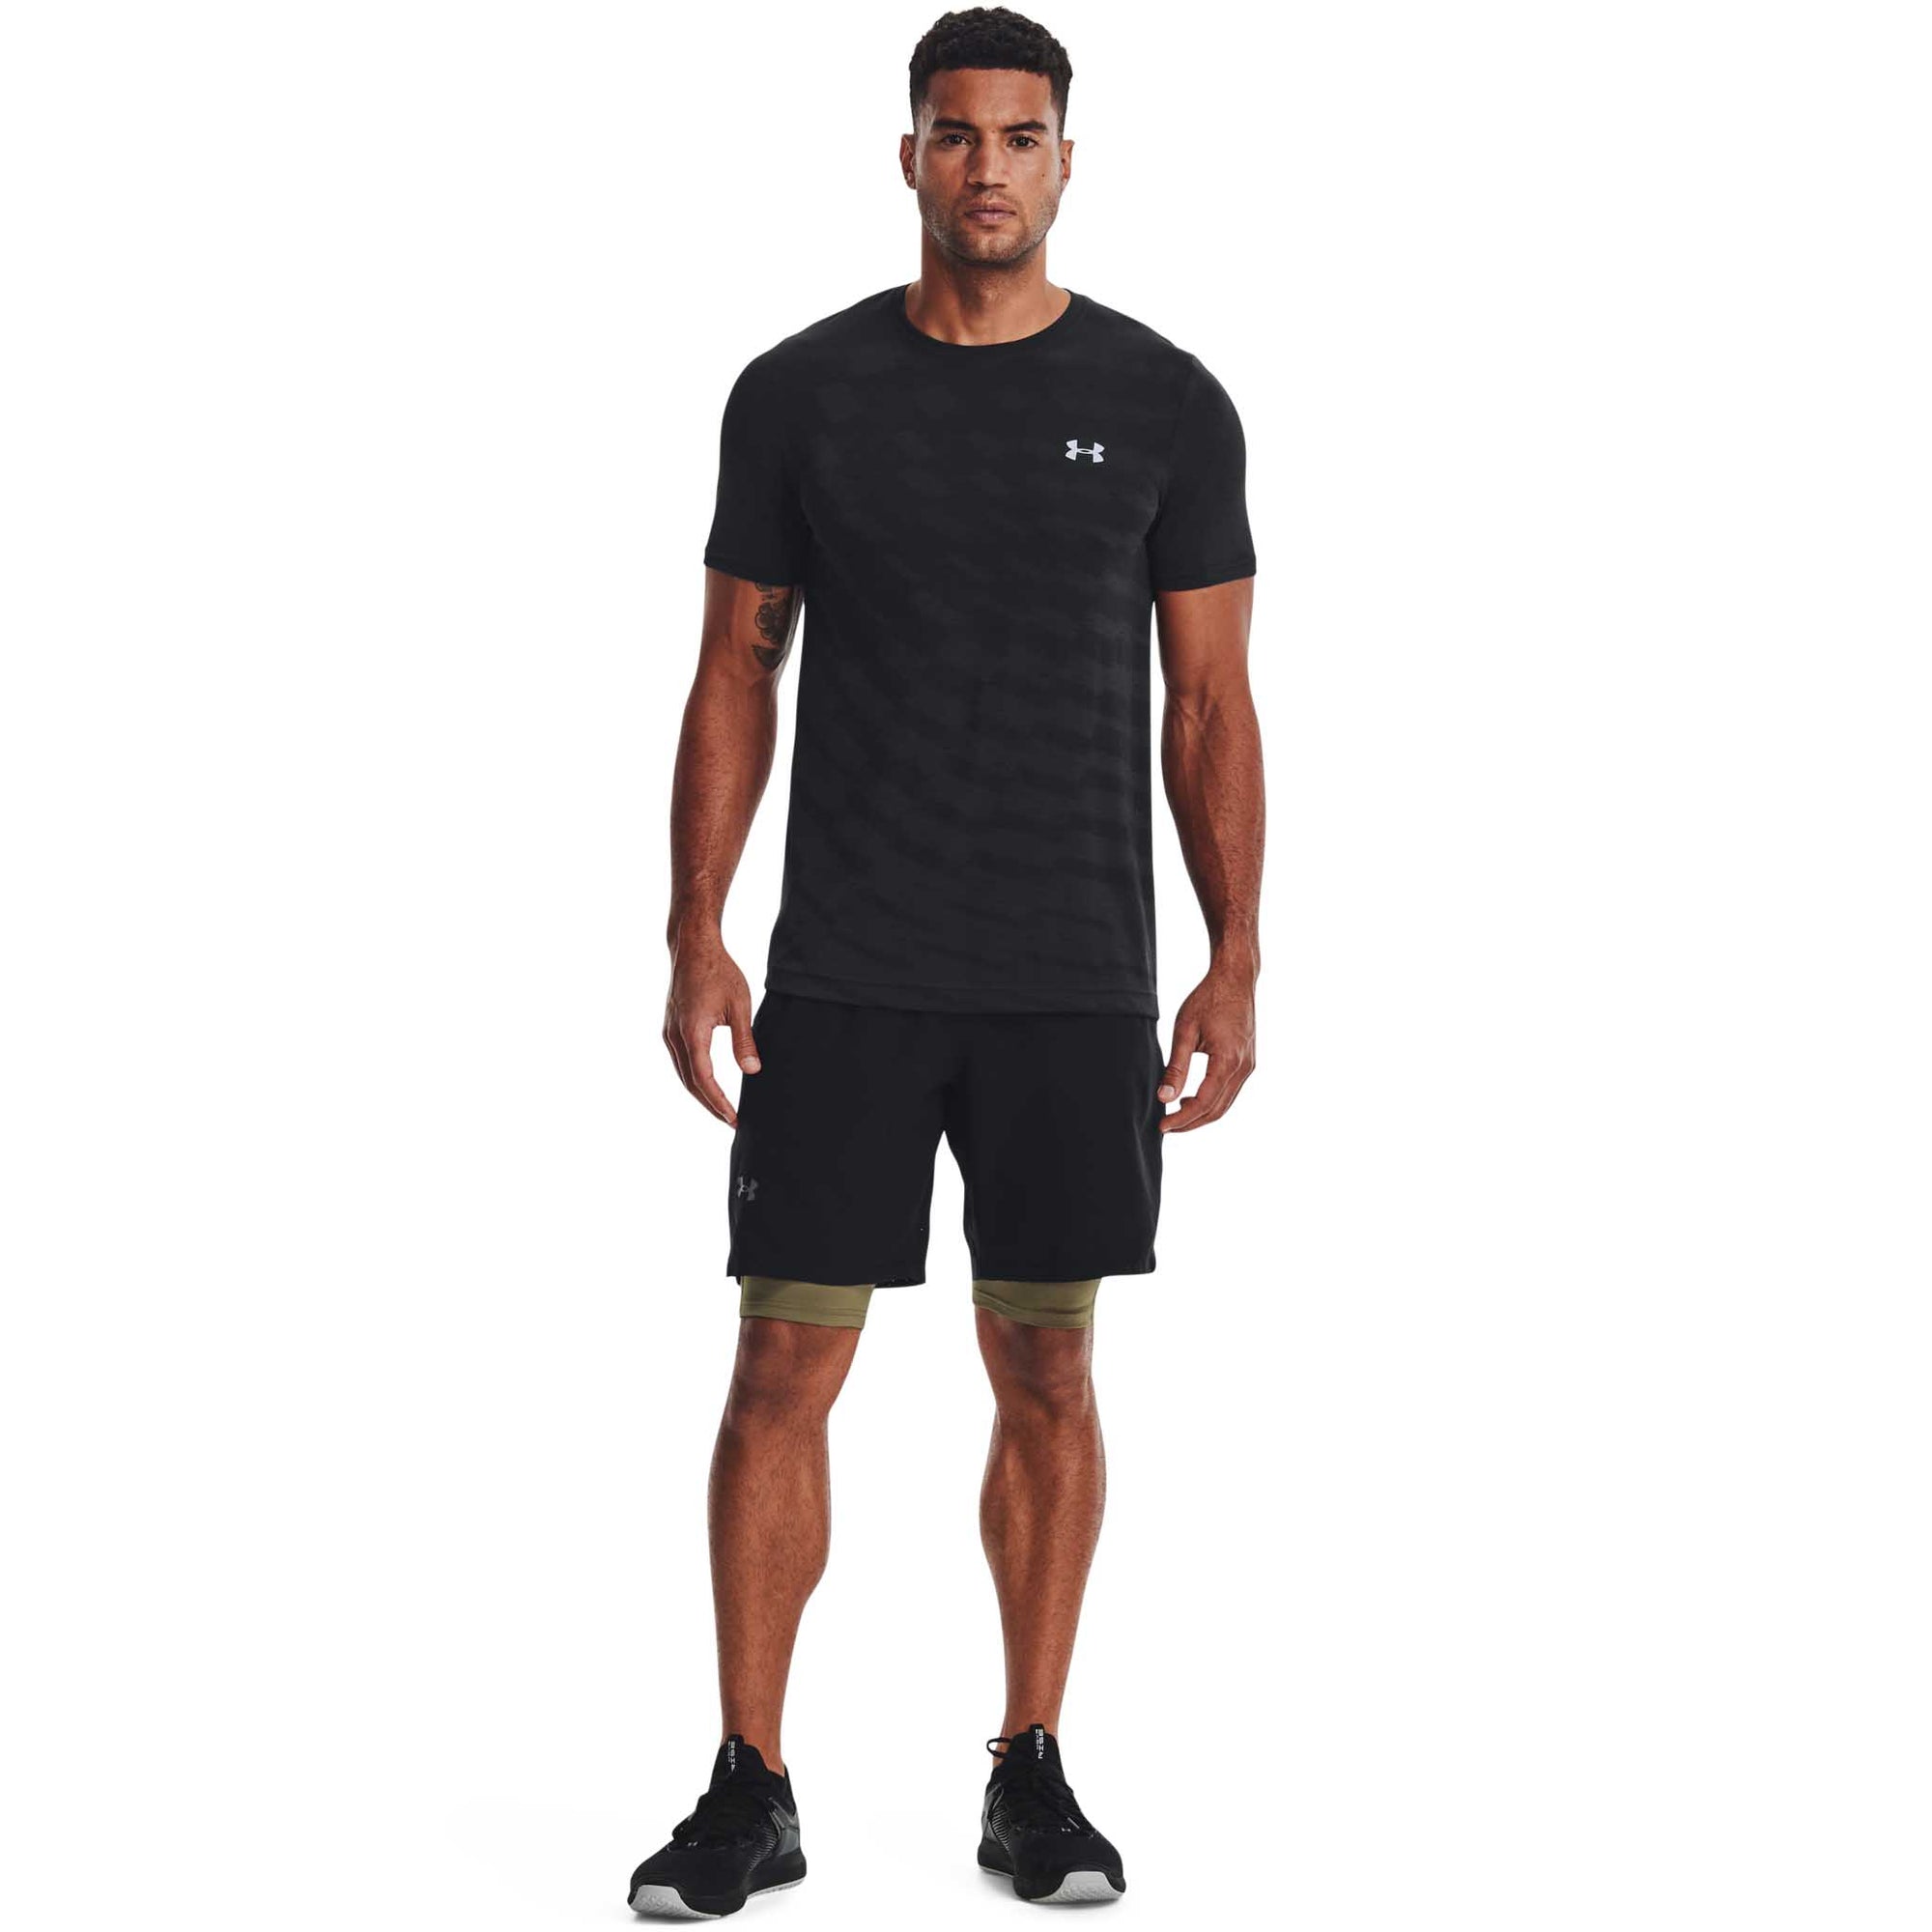 UA Vanish Woven 8-inch shorts pour homme - black / pitch grey